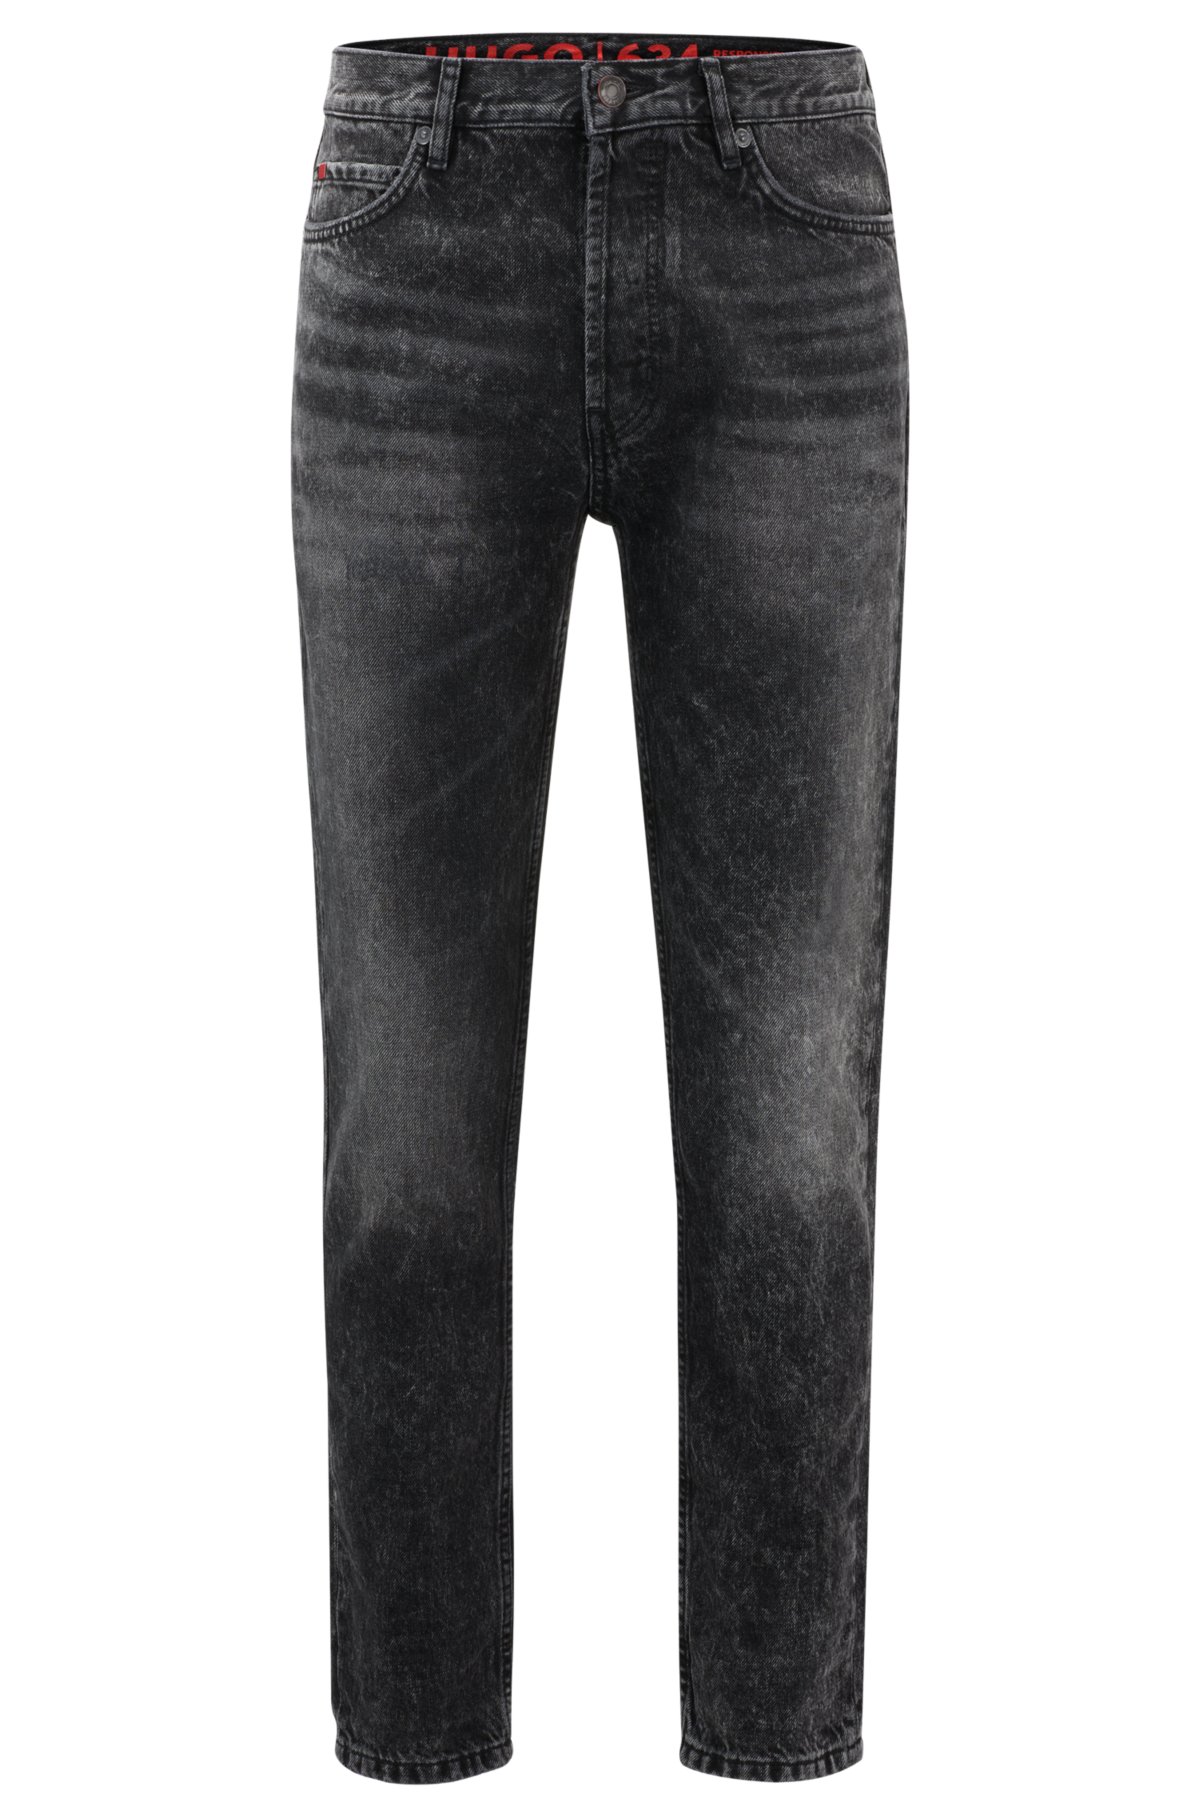 HUGO - Tapered-fit jeans in black rigid denim